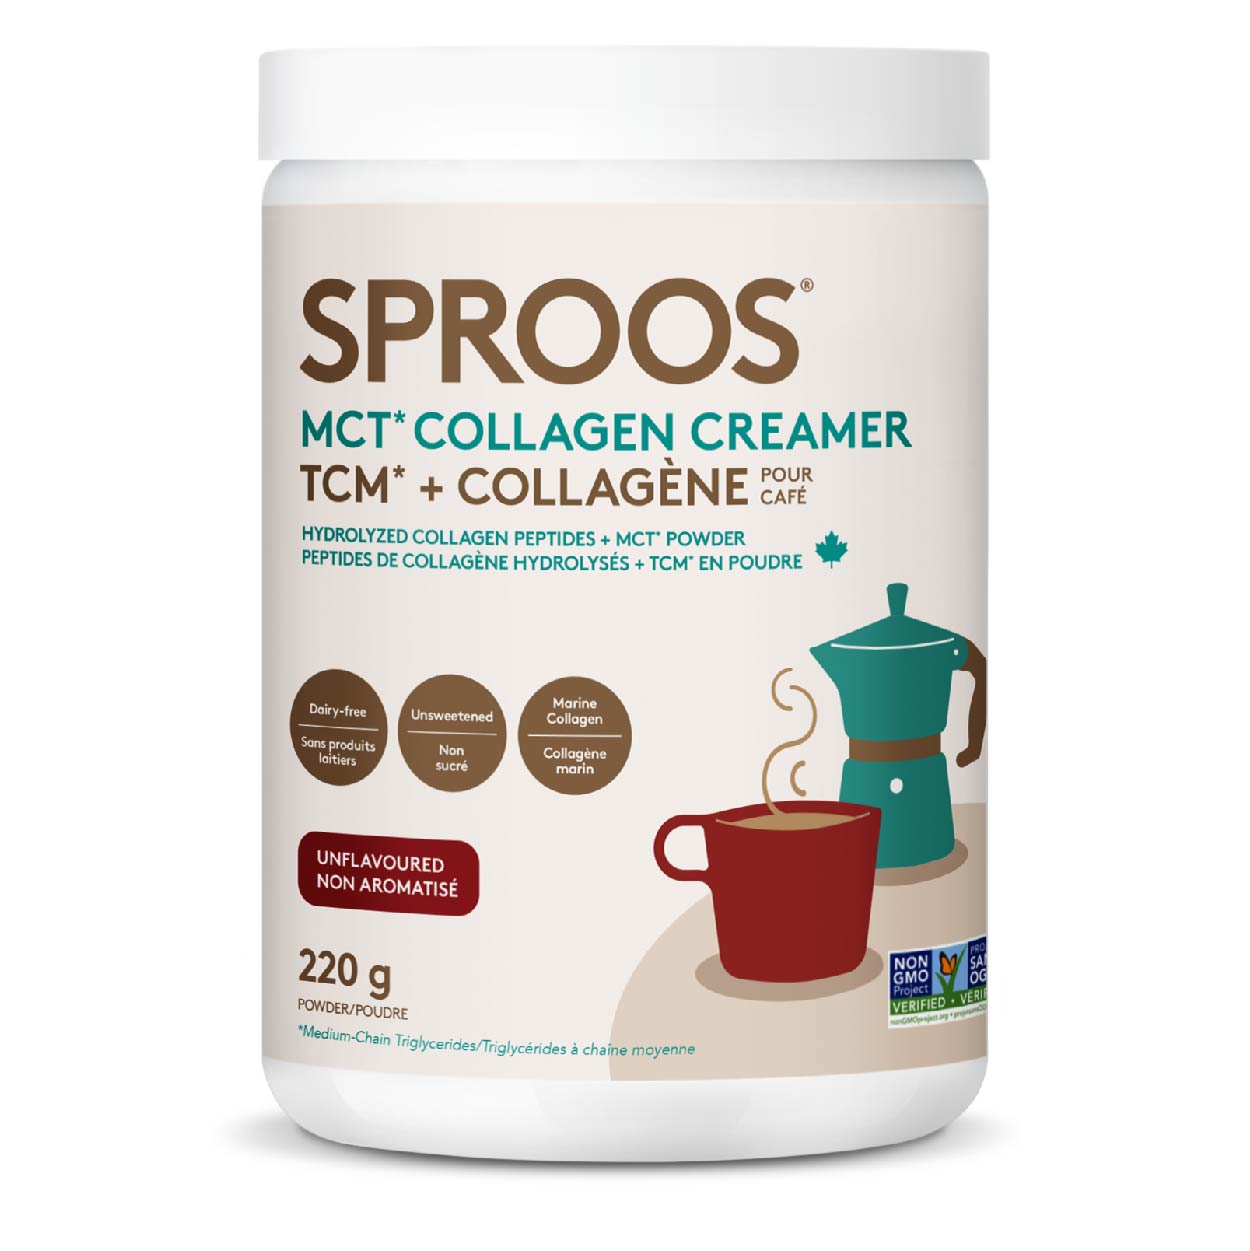 Sproos MCT Collagen Creamer